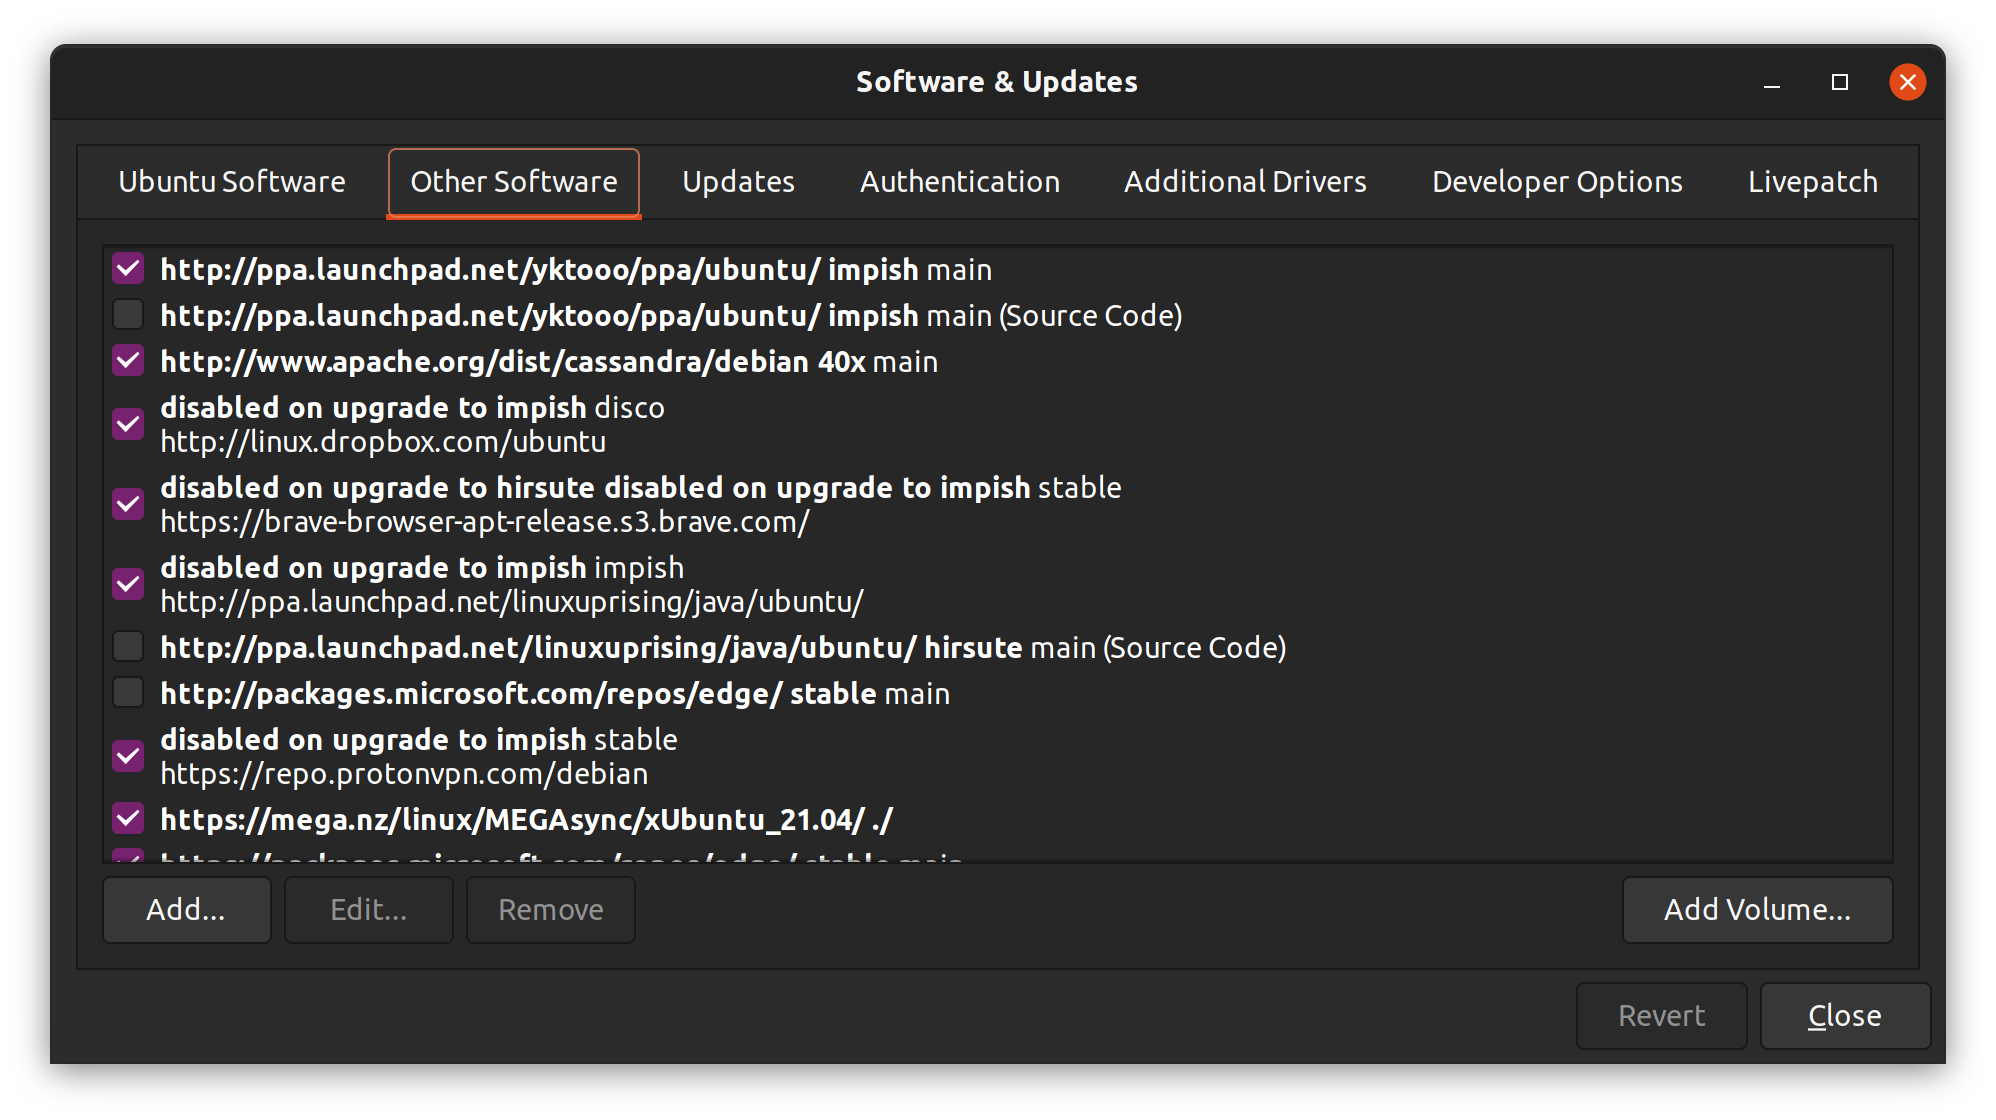 Software & Updates tool in Ubuntu